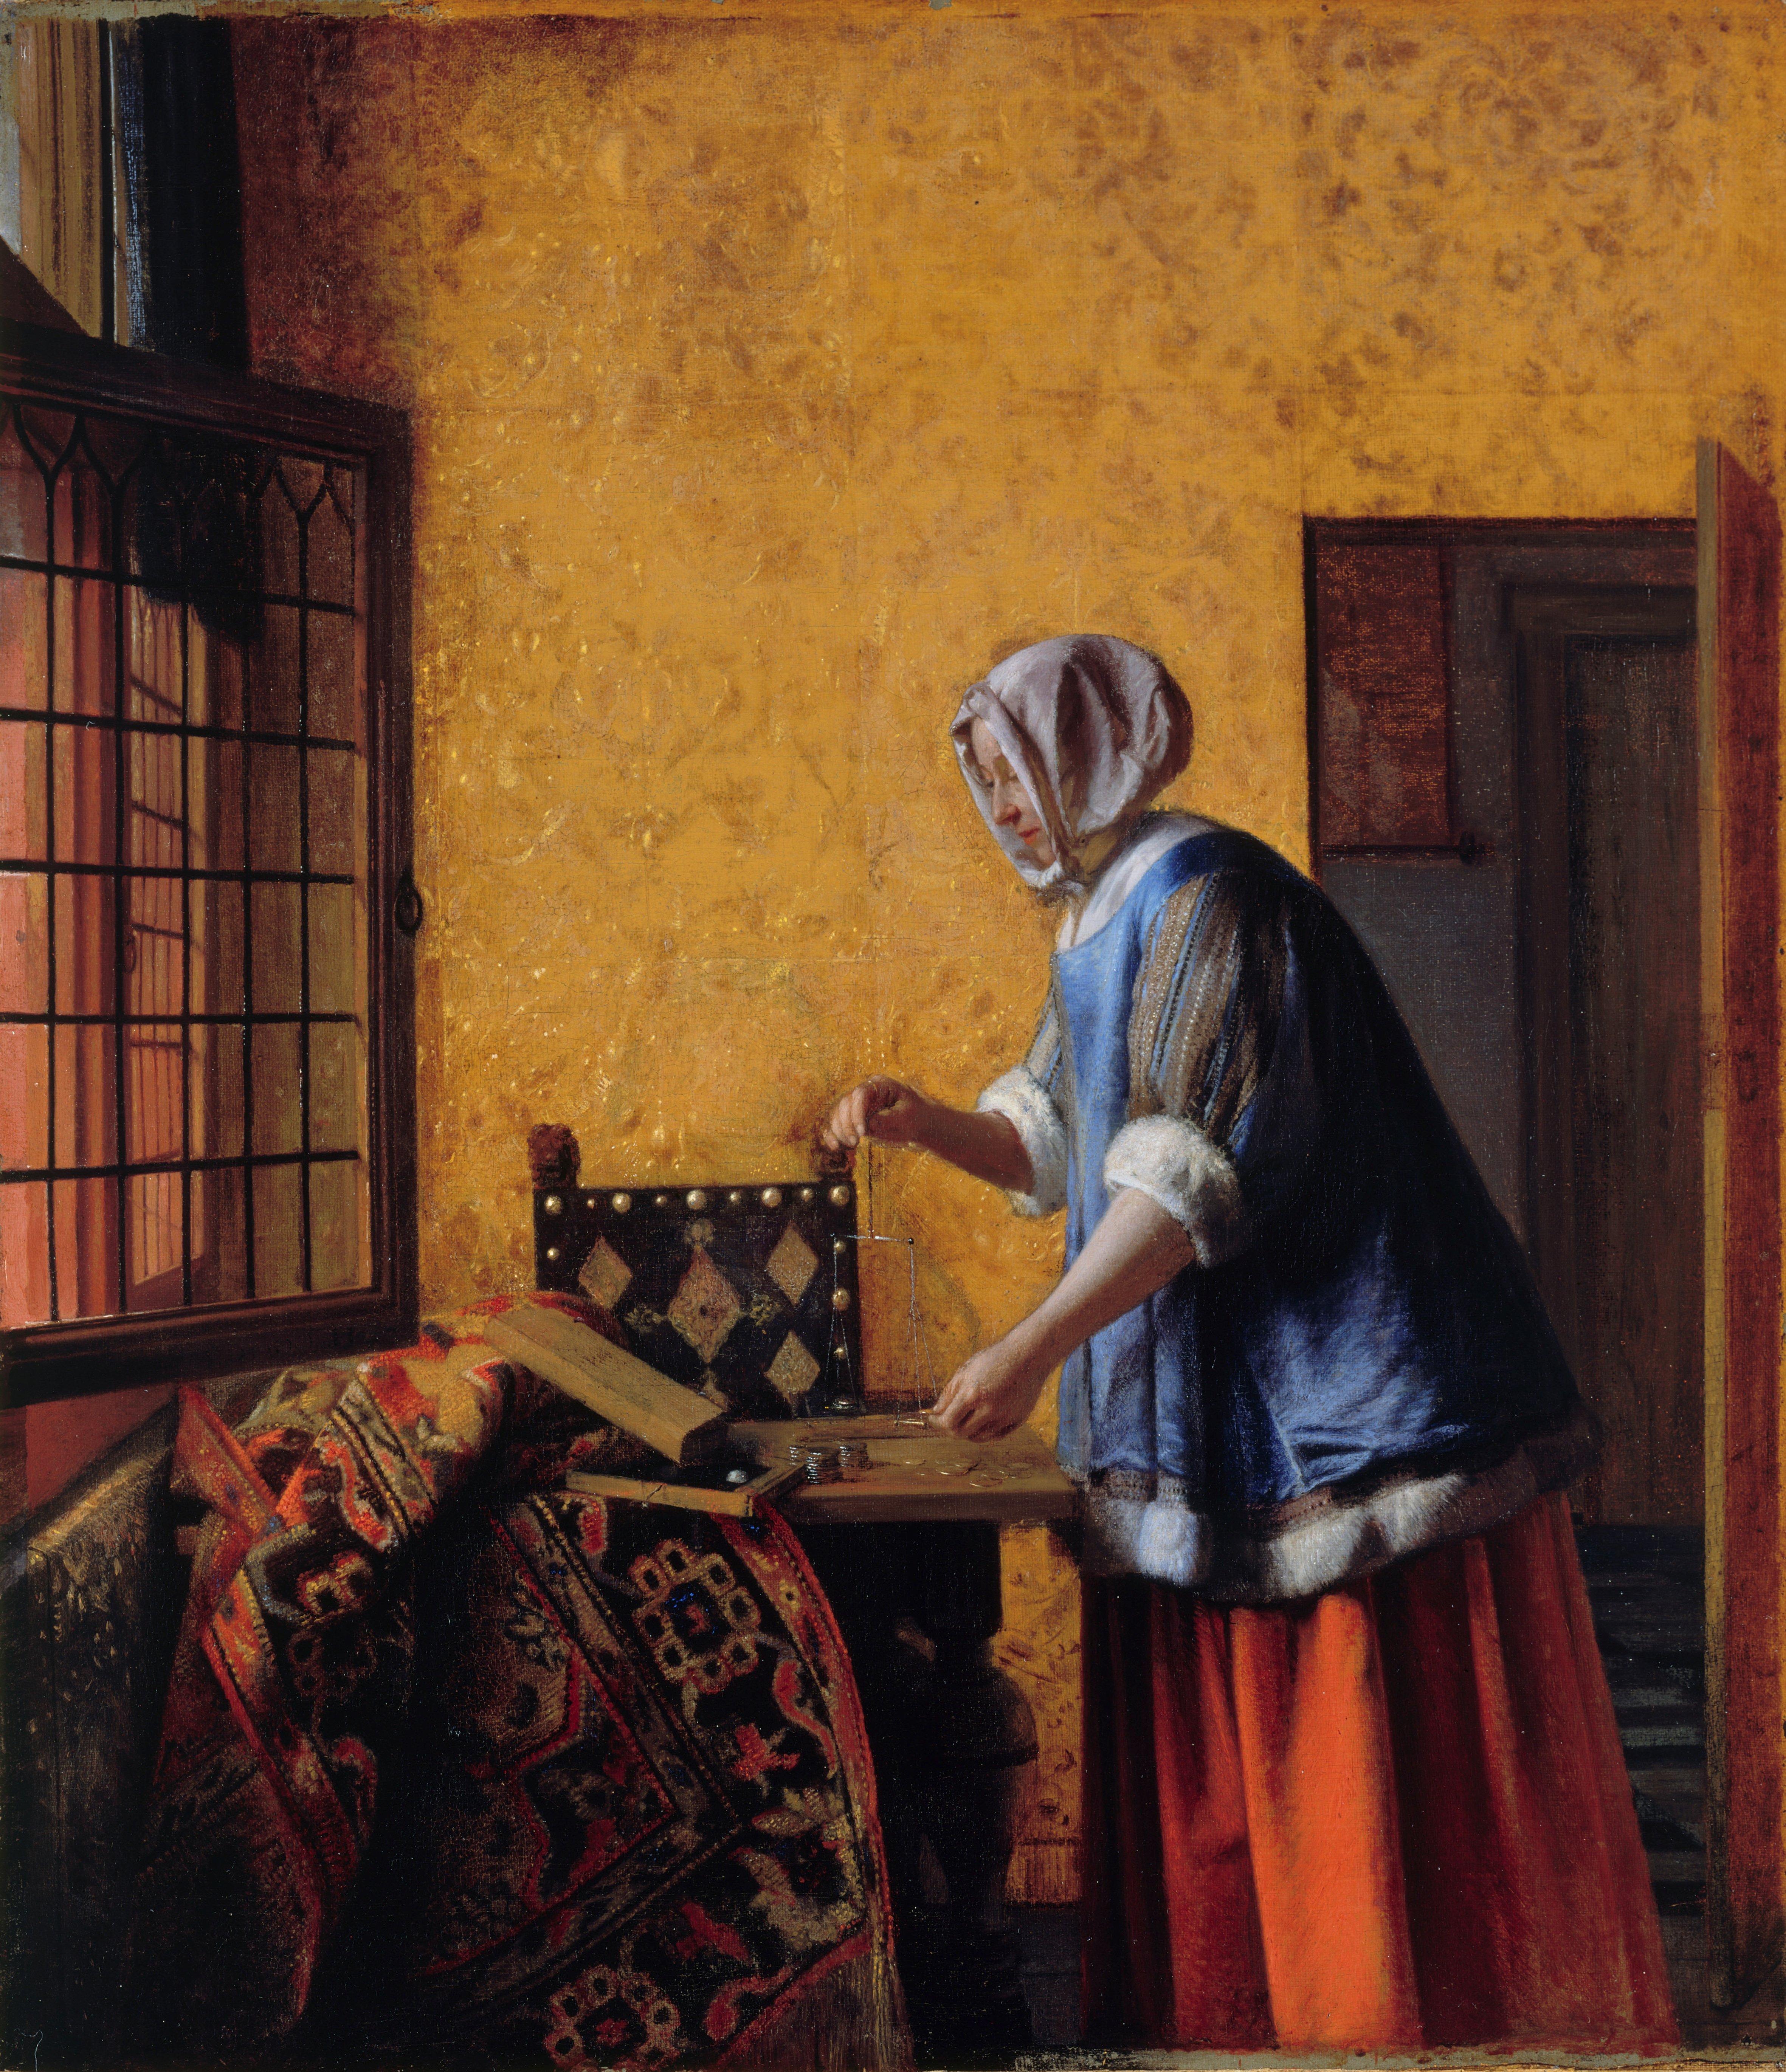 Genshin impact краски вермеера. Питер де Хох женщина взвешивающая золото. Питер де Хох (1629 — 1684). Художник Питер де Хох.